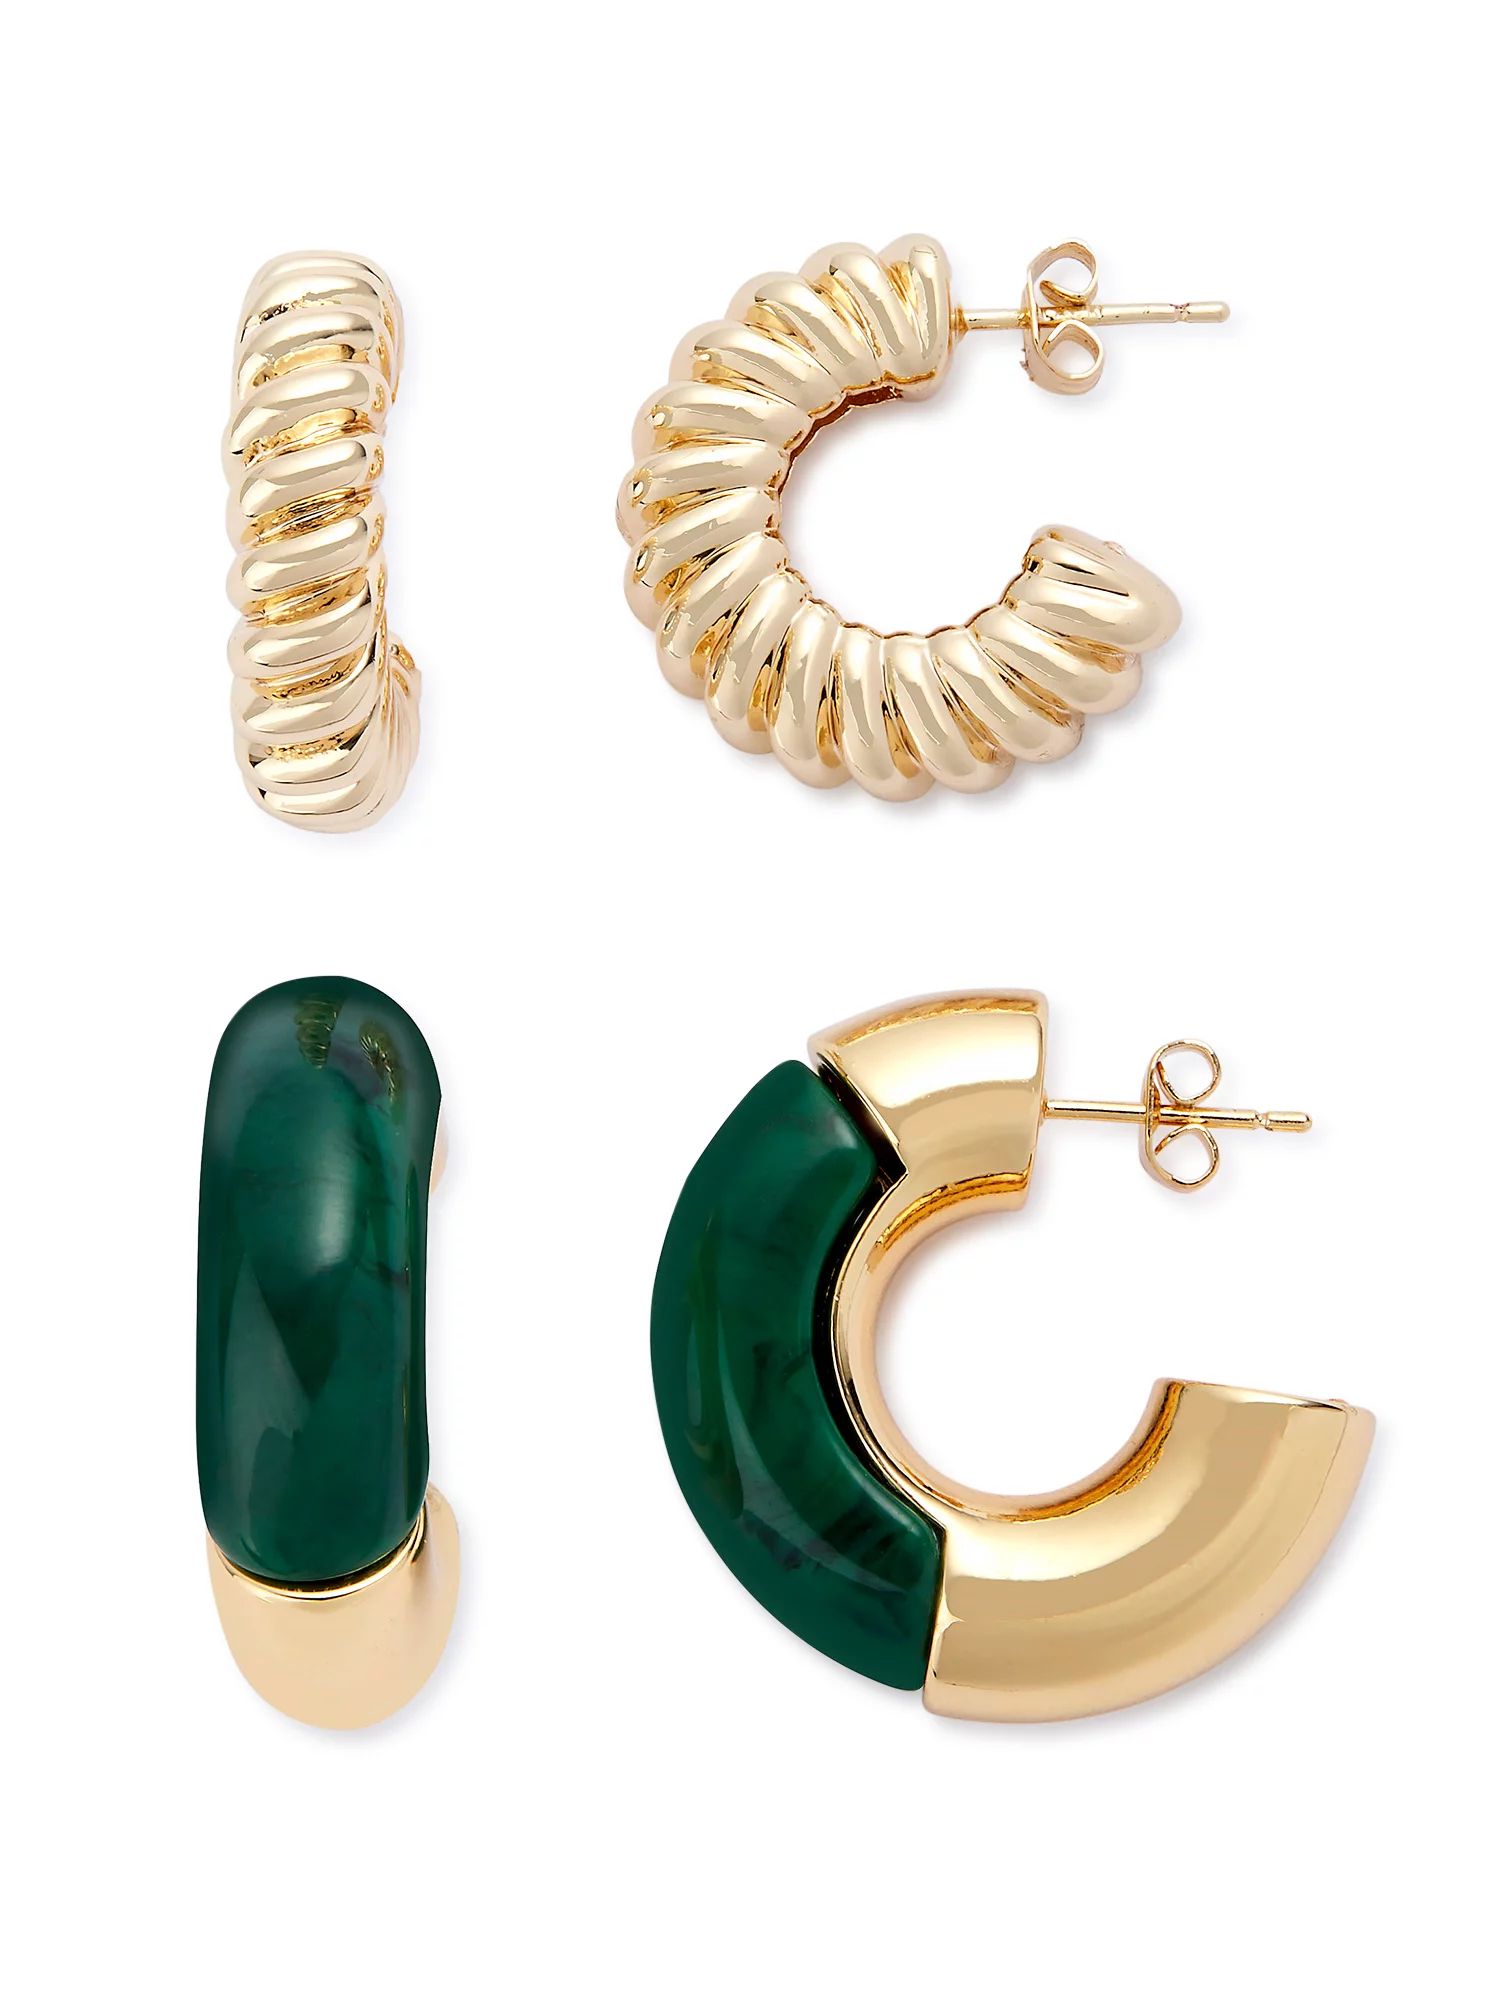 Scoop Women’s Green Resin Hoop Earrings in 14KT Flash Plated Gold, 2-Piece Set | Walmart (US)